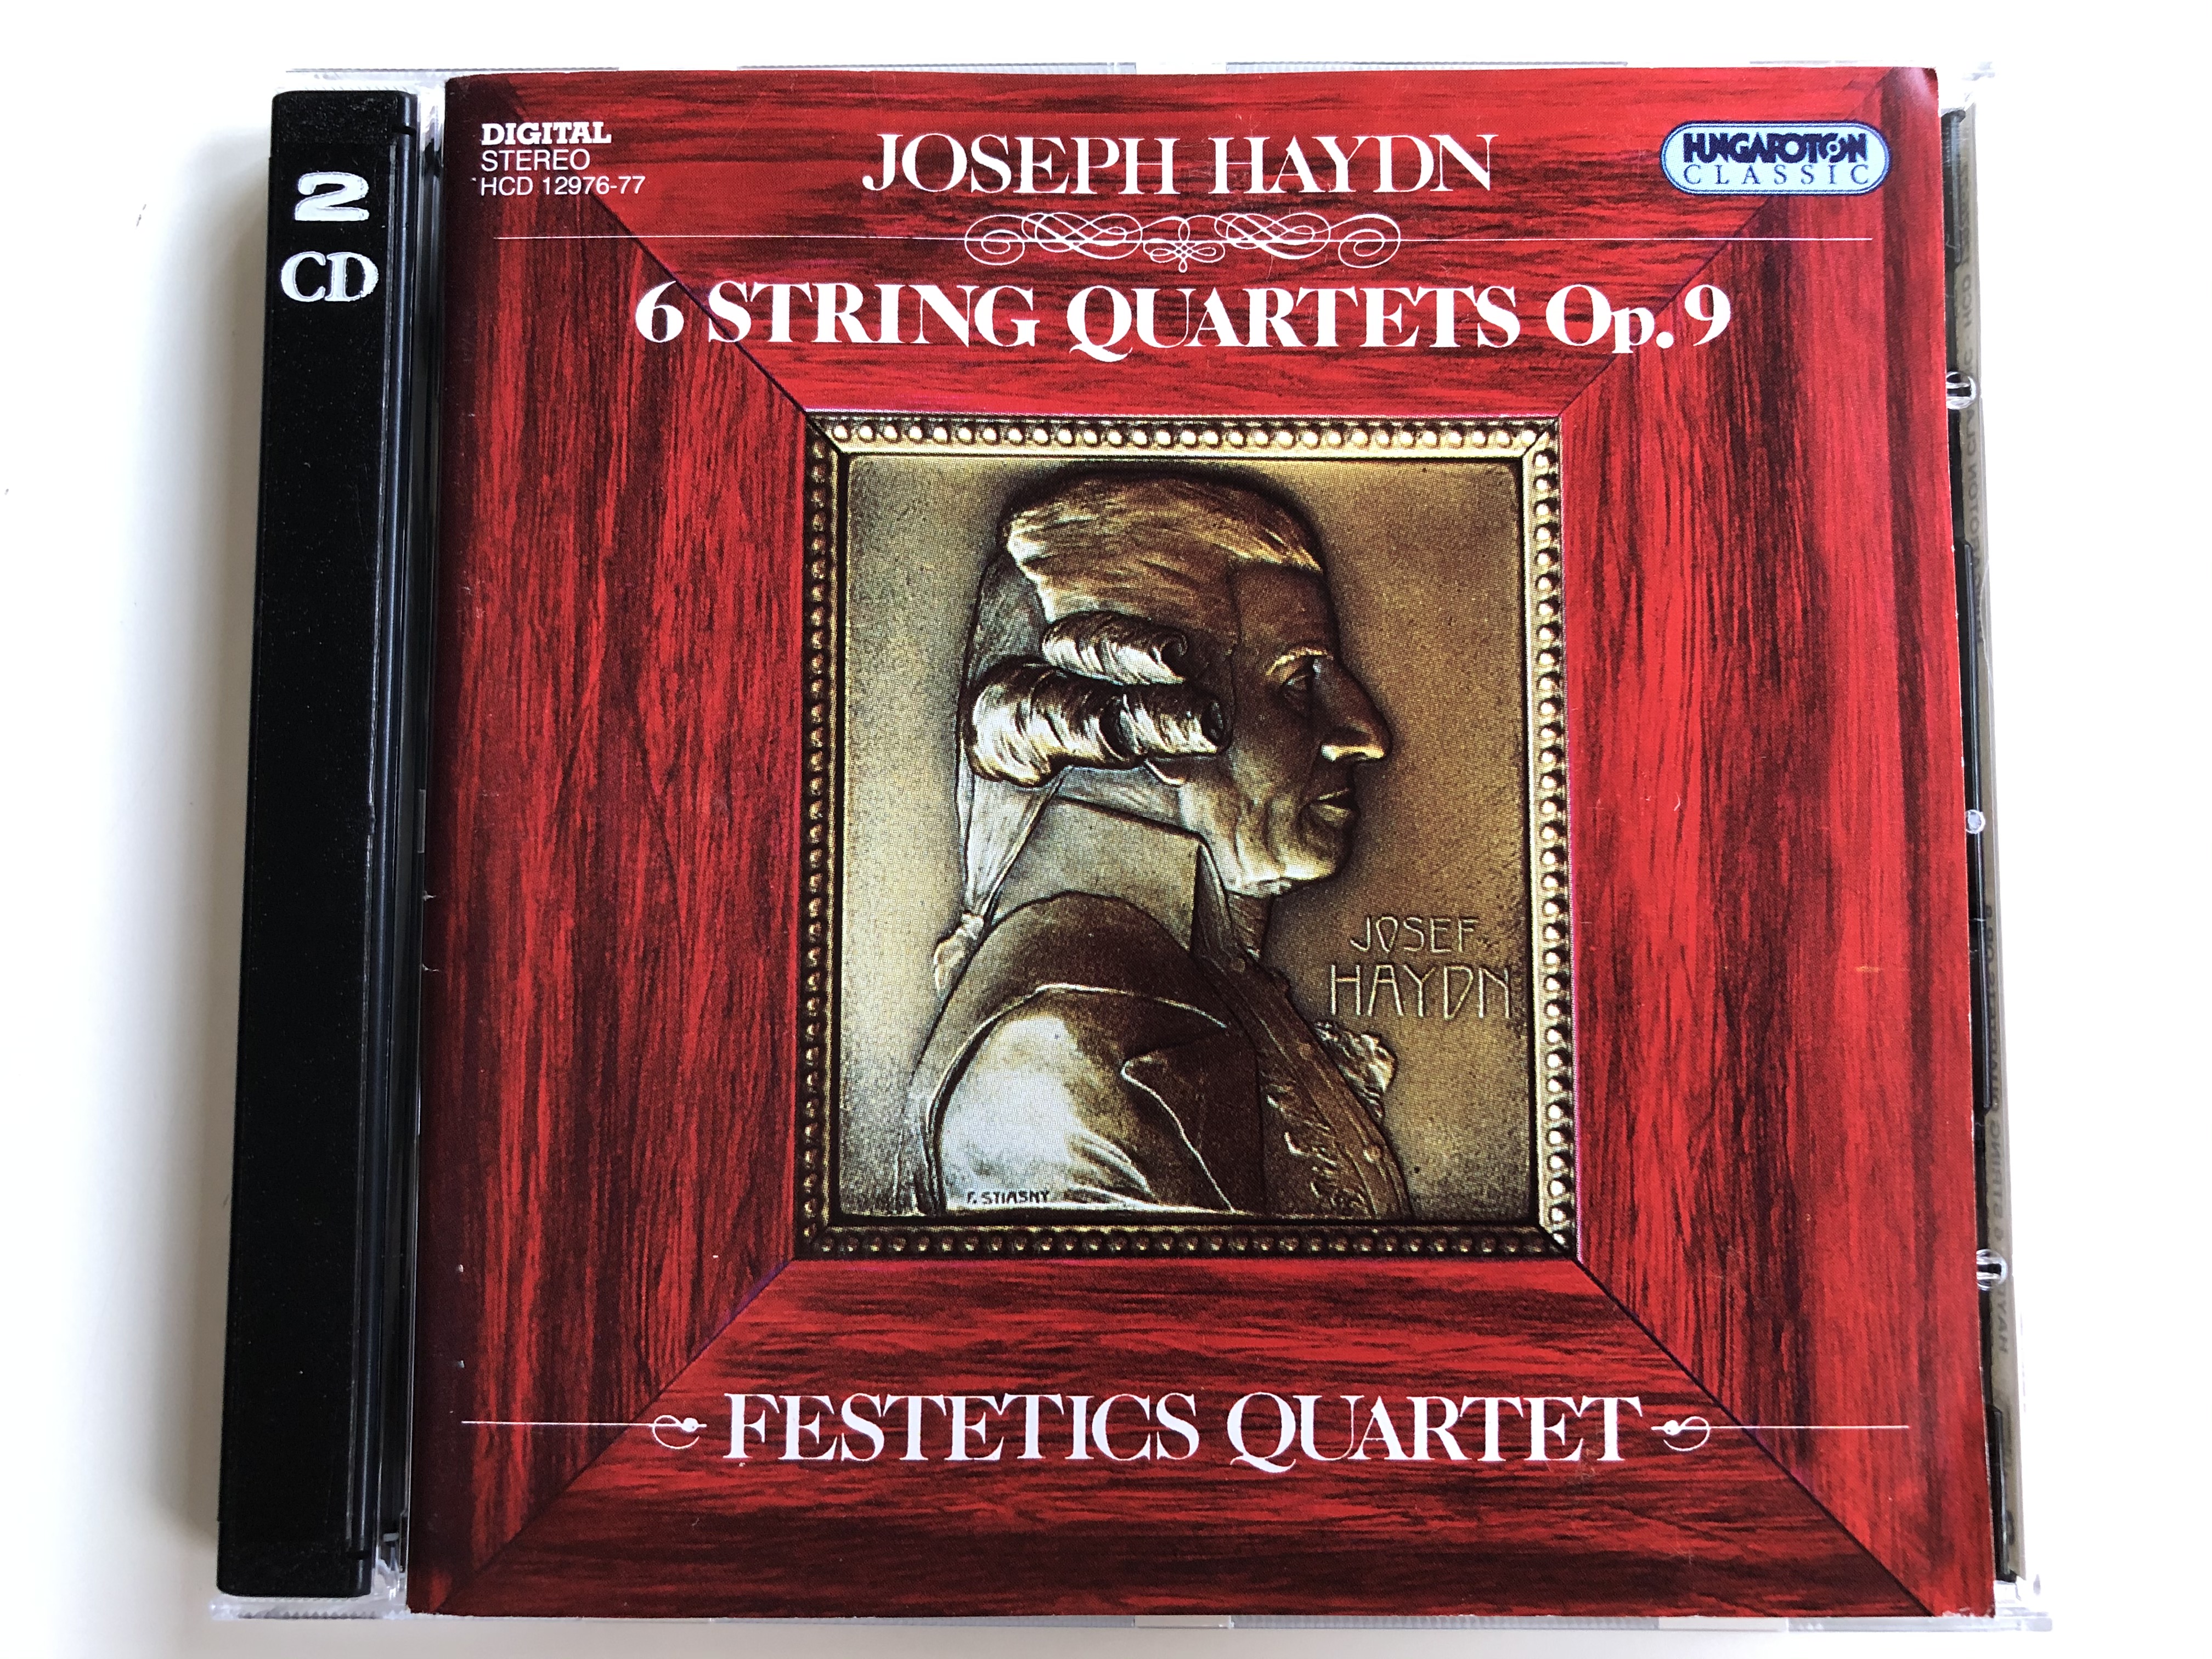 joseph-haydn-6-string-quartets-op.9-festetics-quartet-hungaroton-classic-2x-audio-cd-1995-stereo-hcd-12976-77-1-.jpg